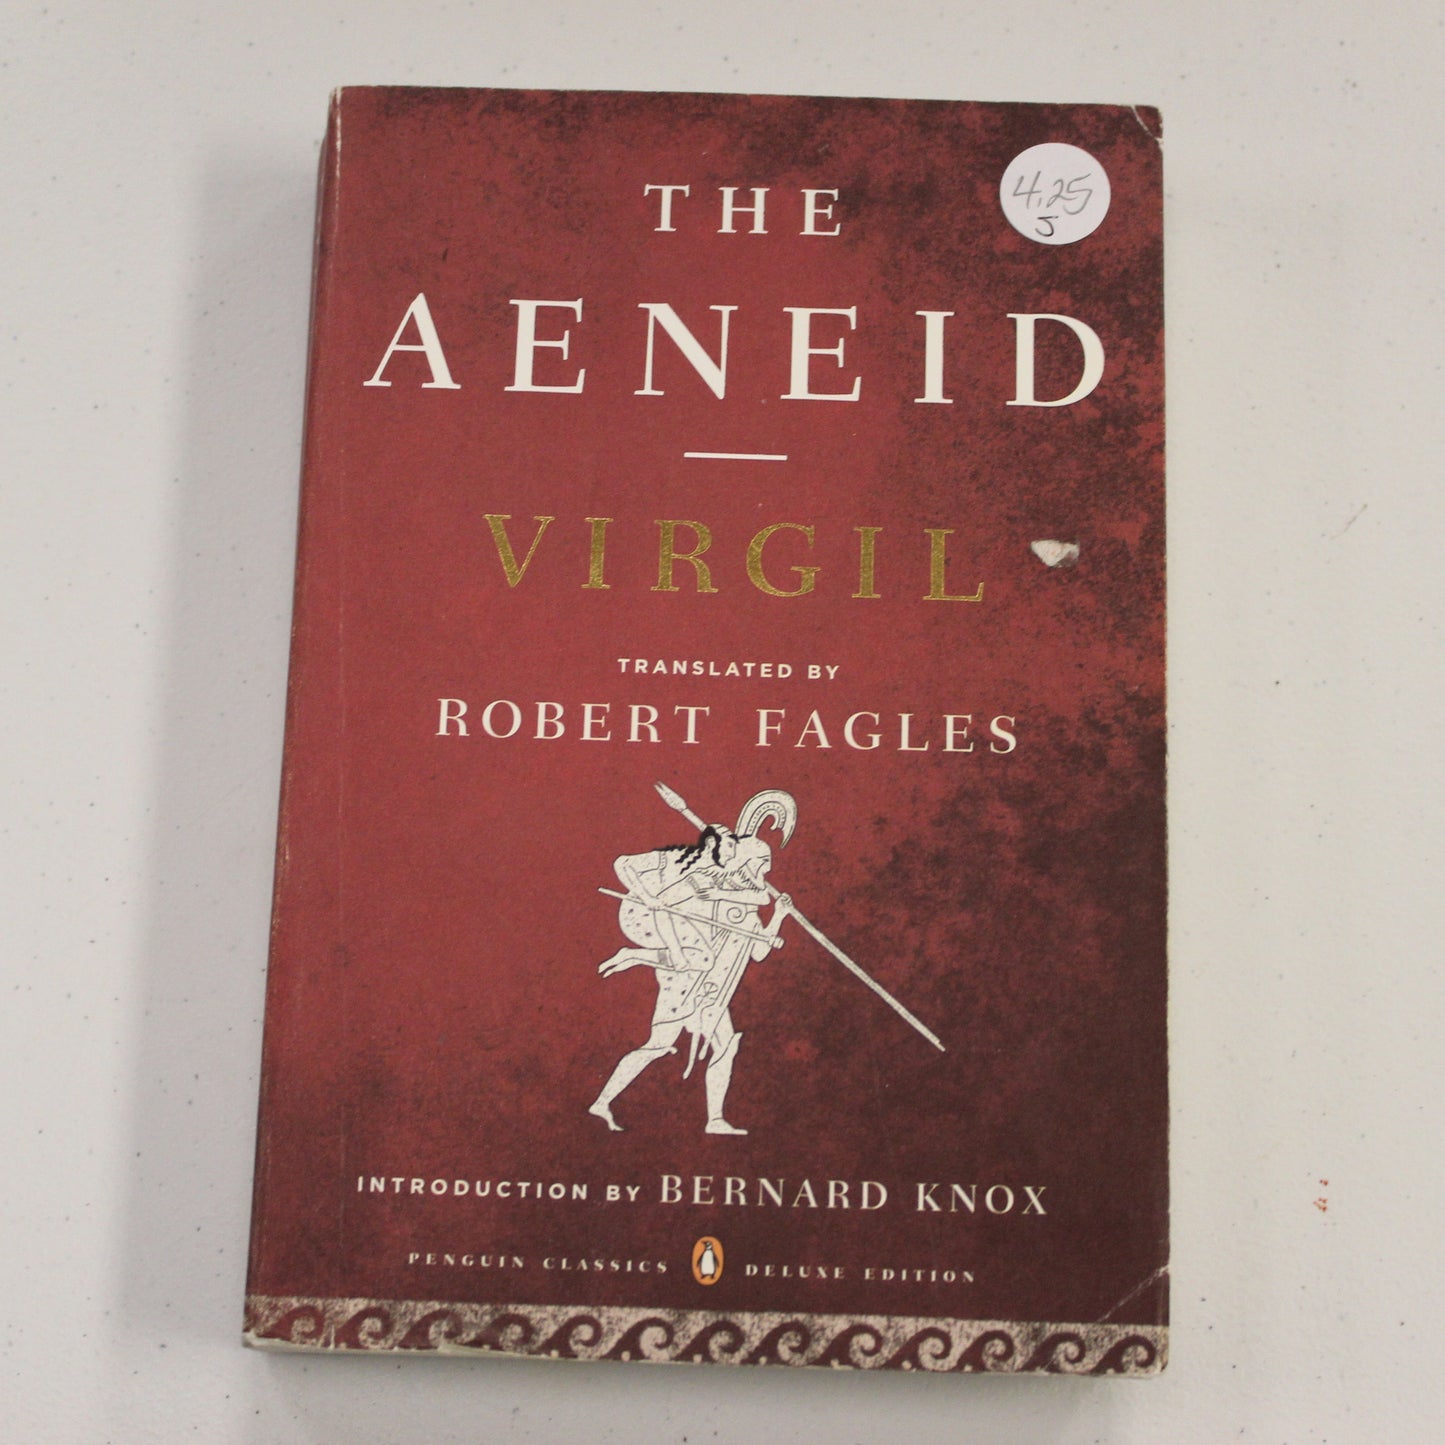 THE AENEID VIRGIL